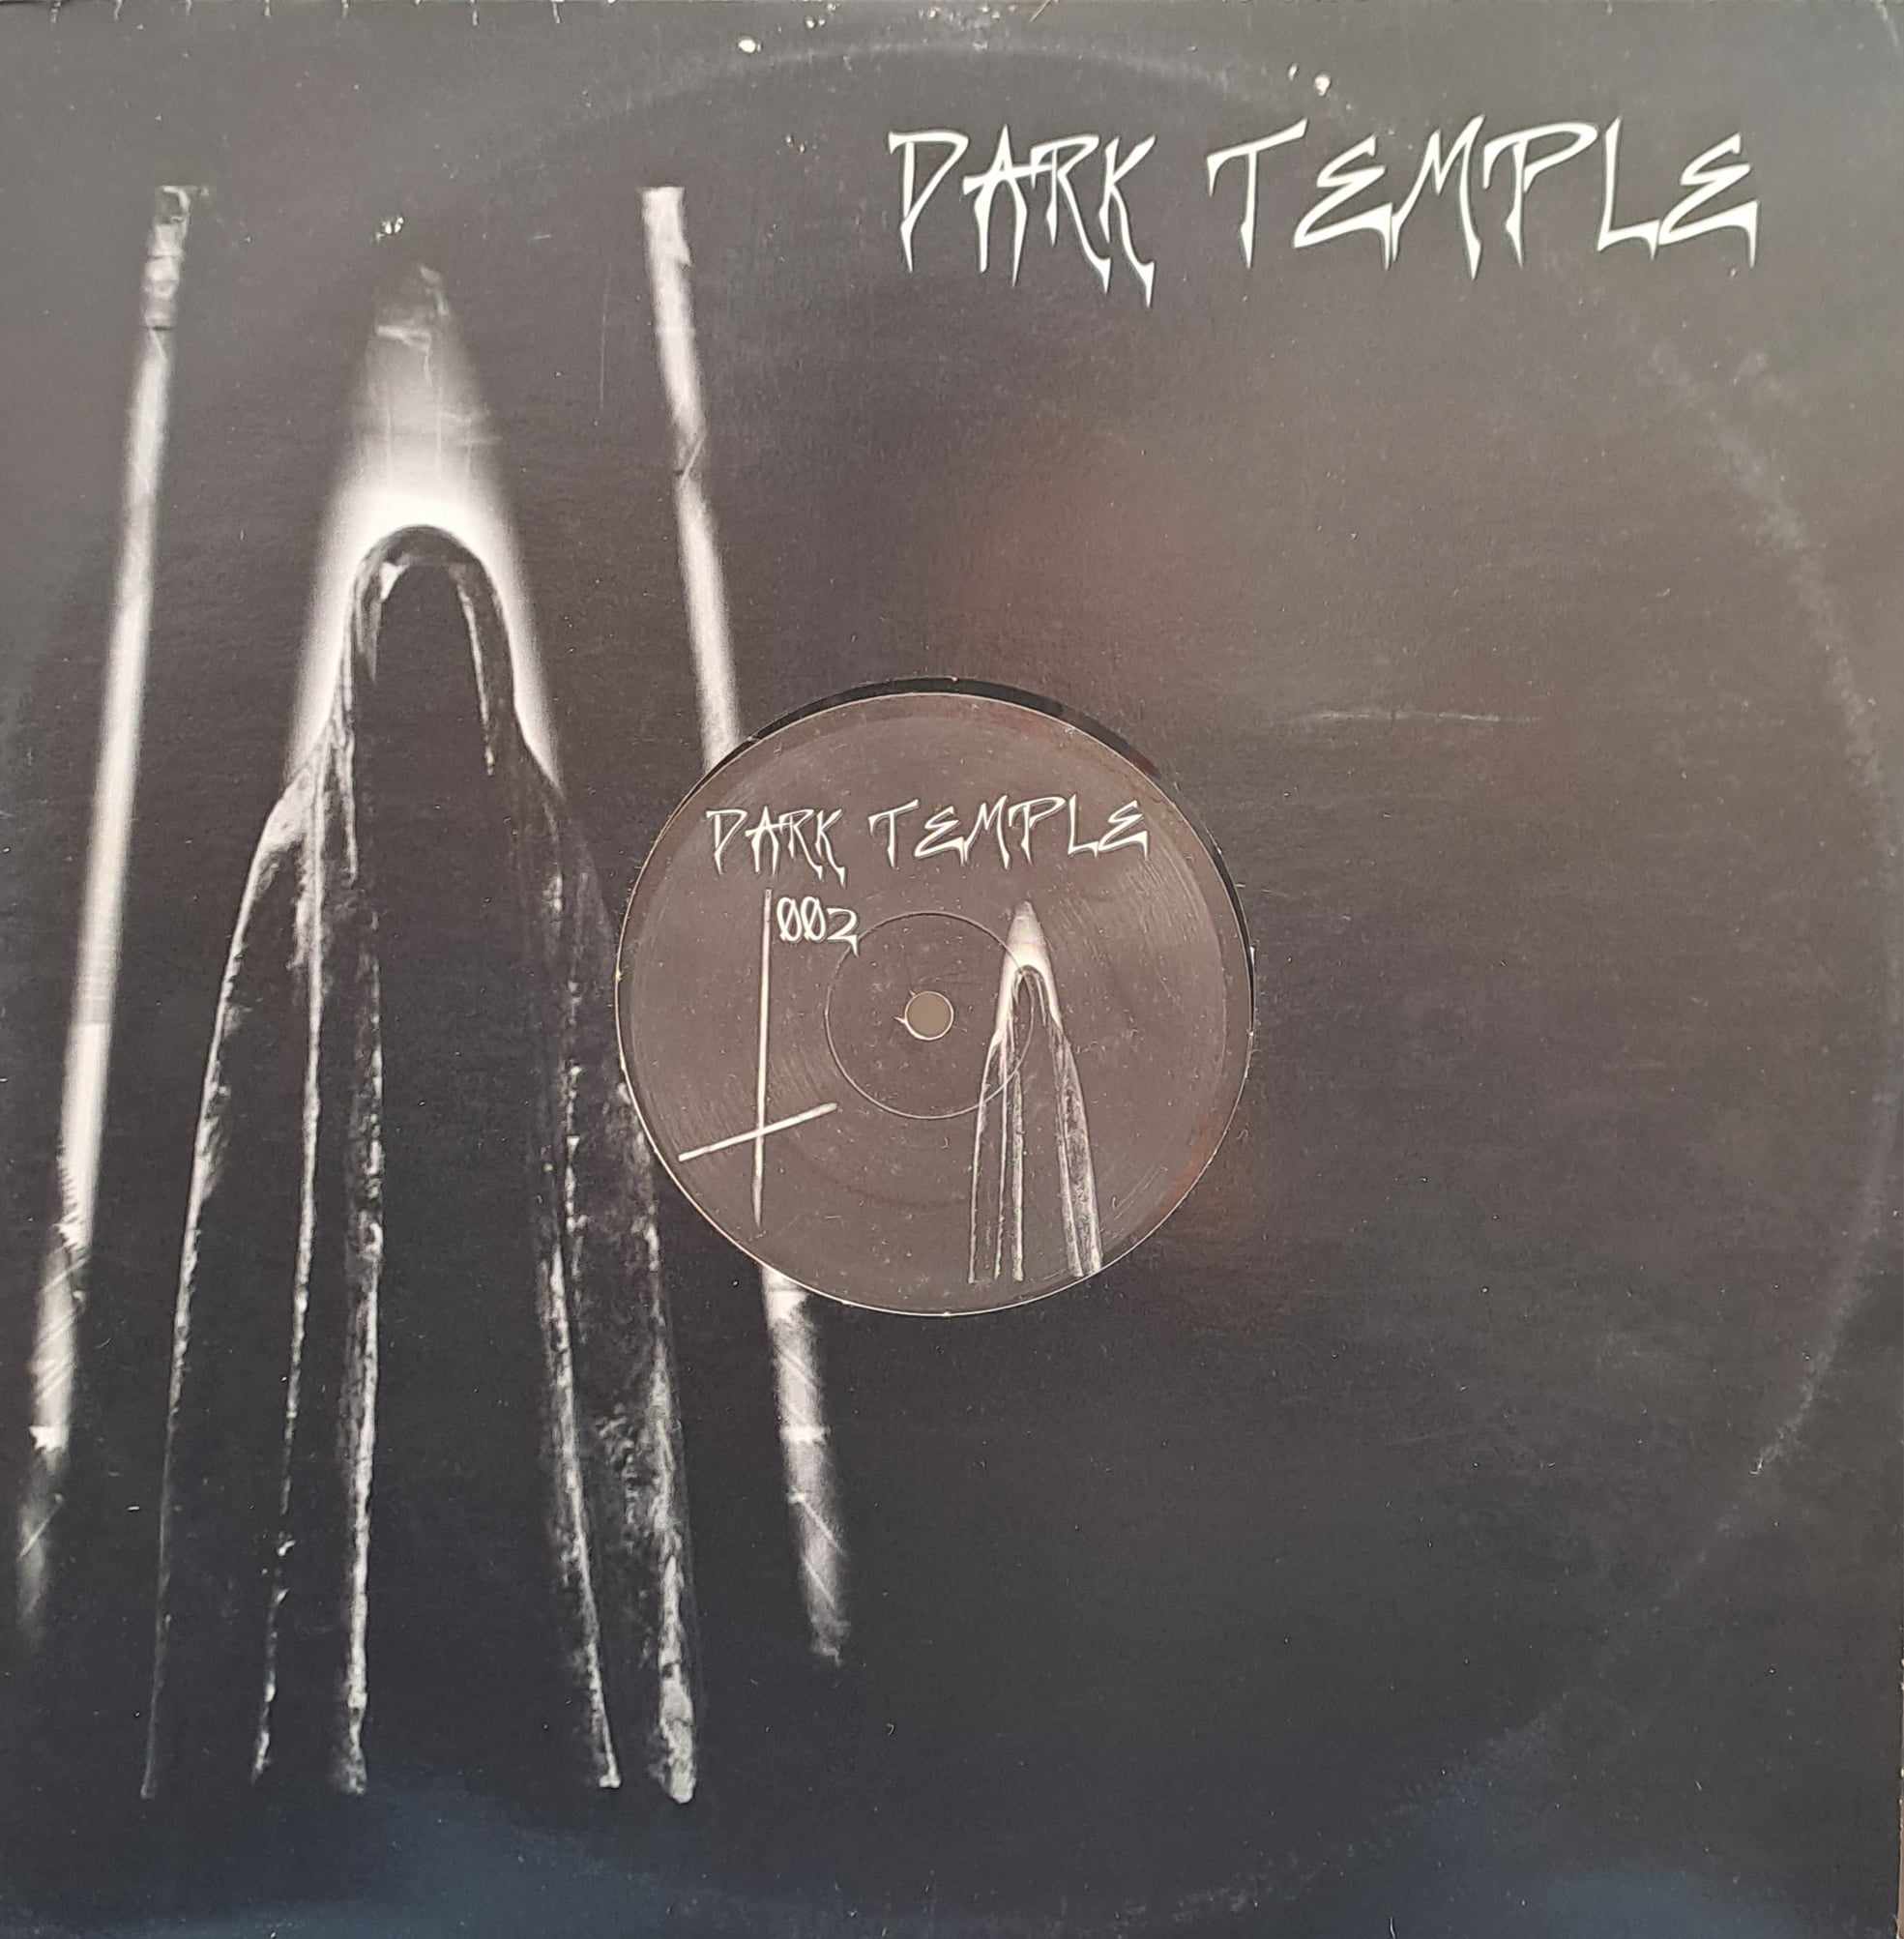 Dark Temple 002 - vinyle hardcore